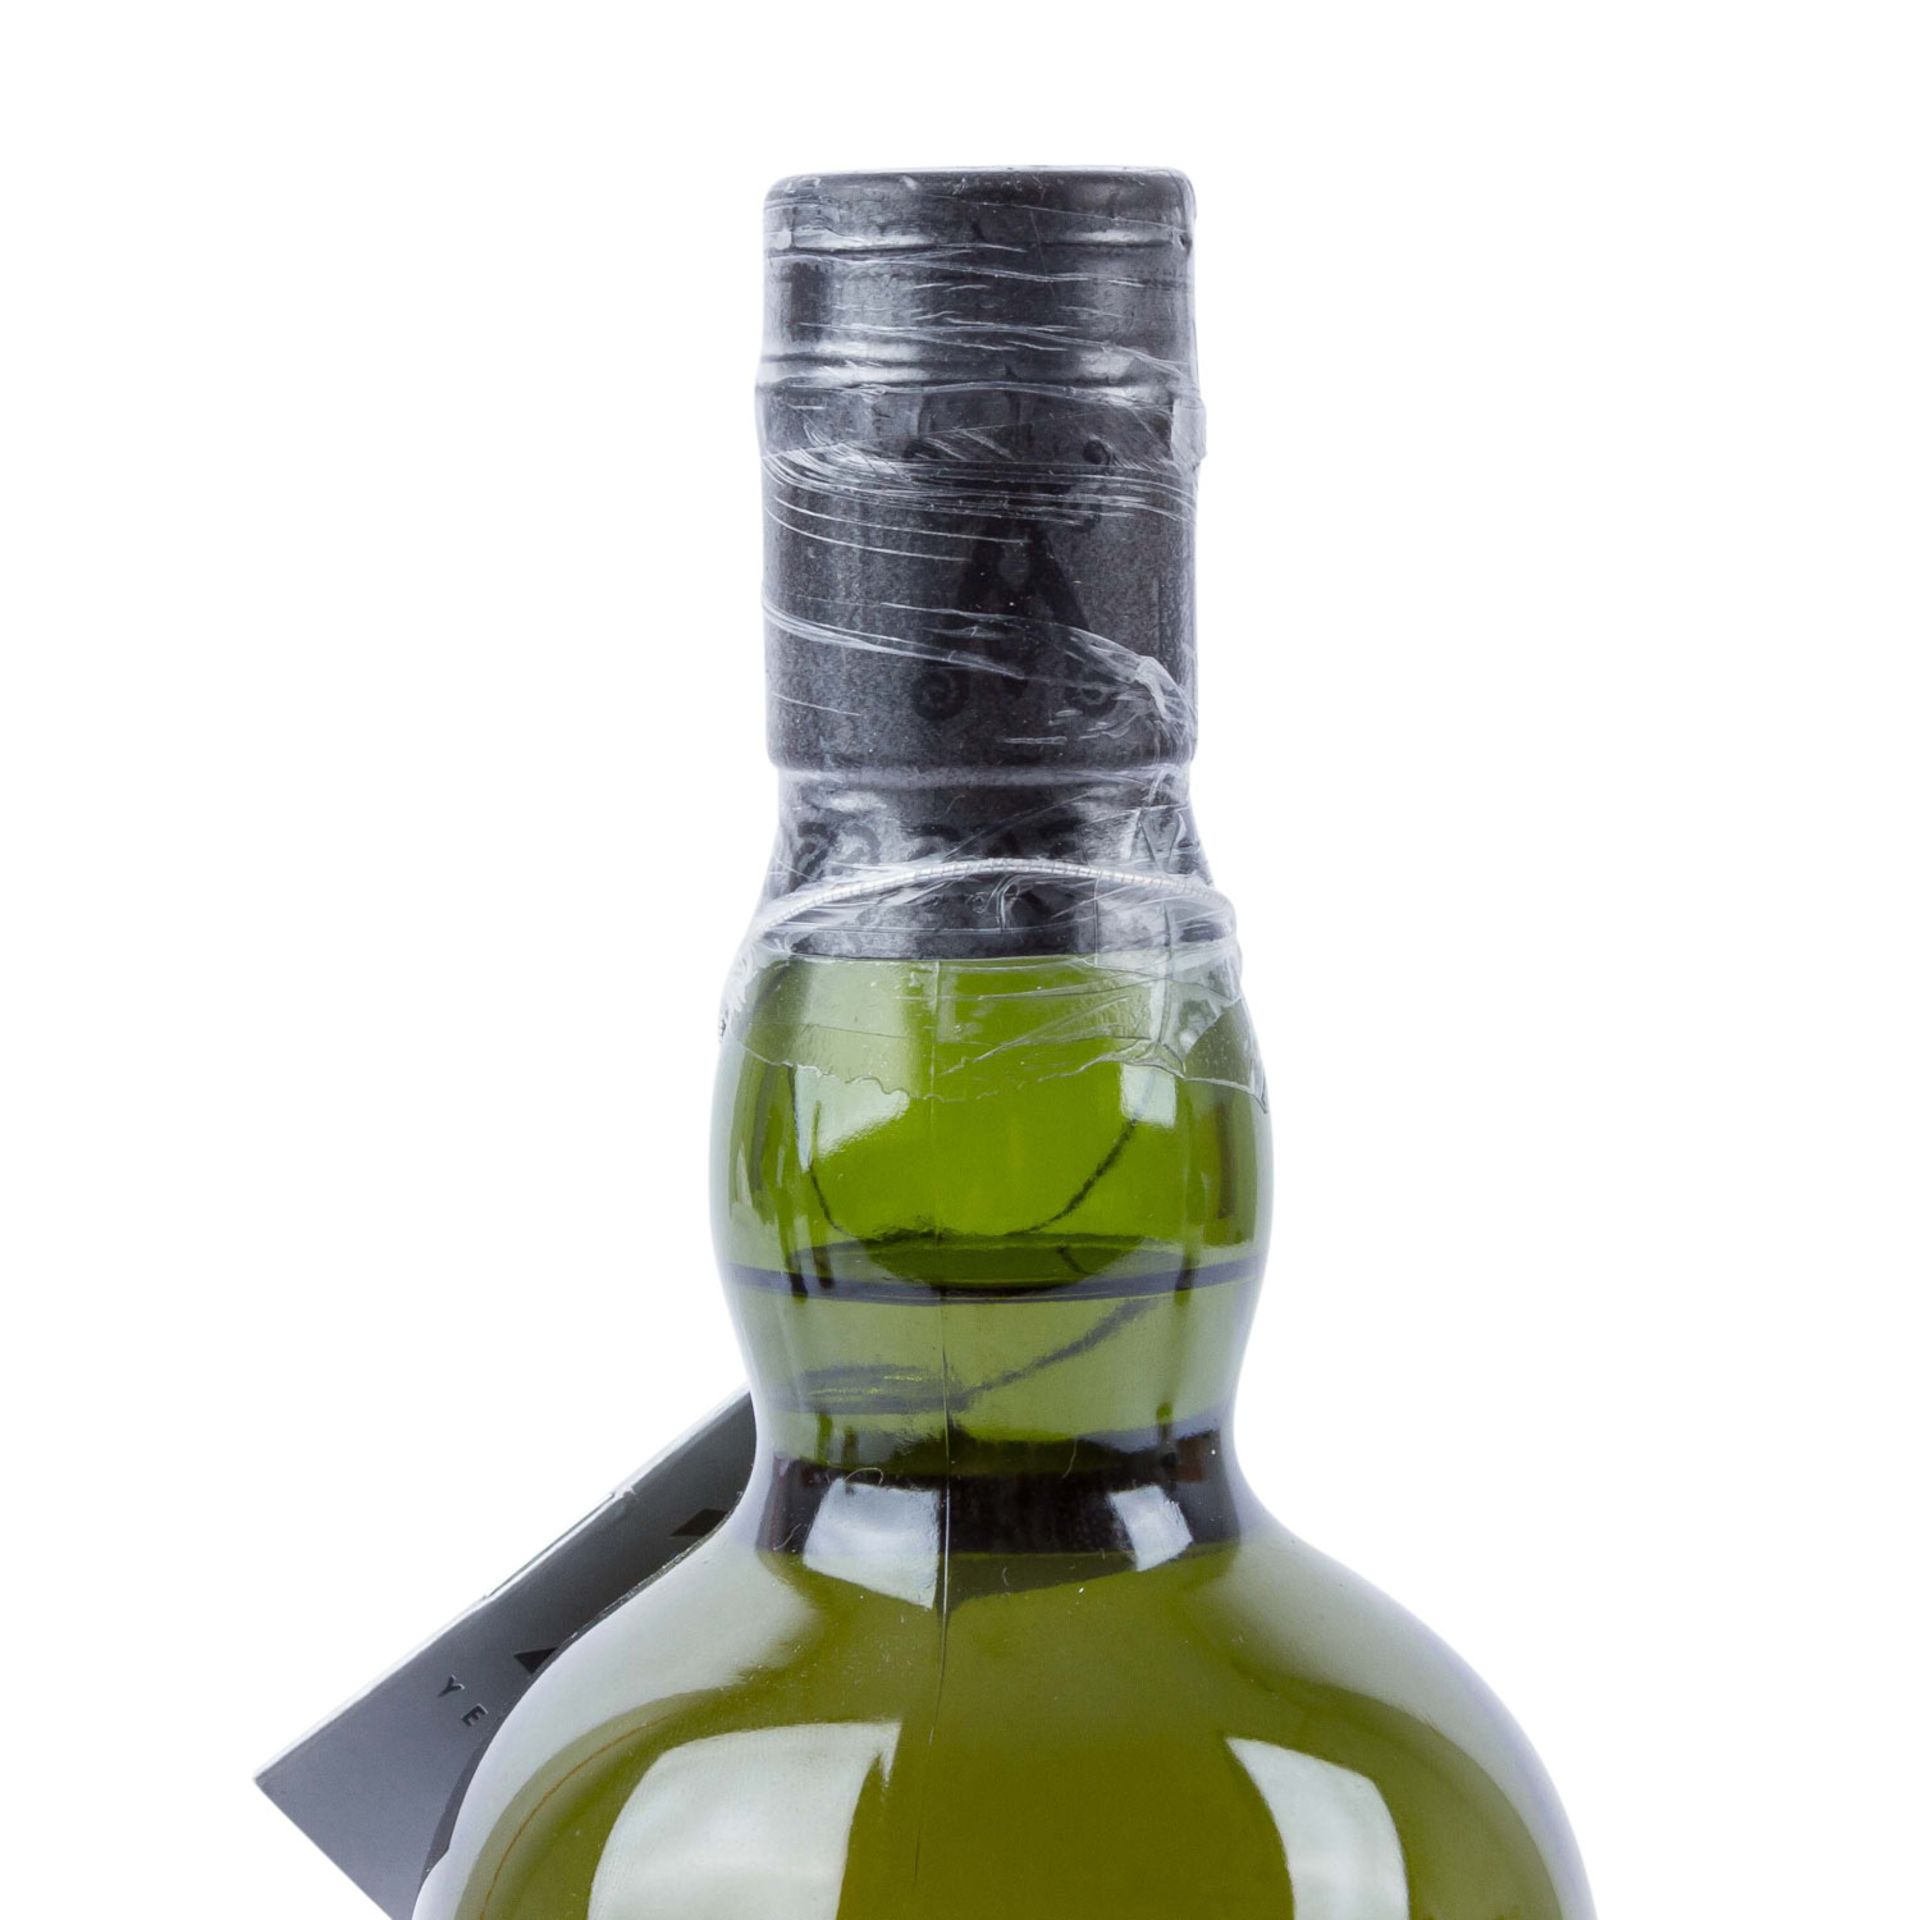 ARDBEG PERPETUUM DISTILLERY RELEASE Islay Single Malt Scotch Whisky 2015 - Image 3 of 3